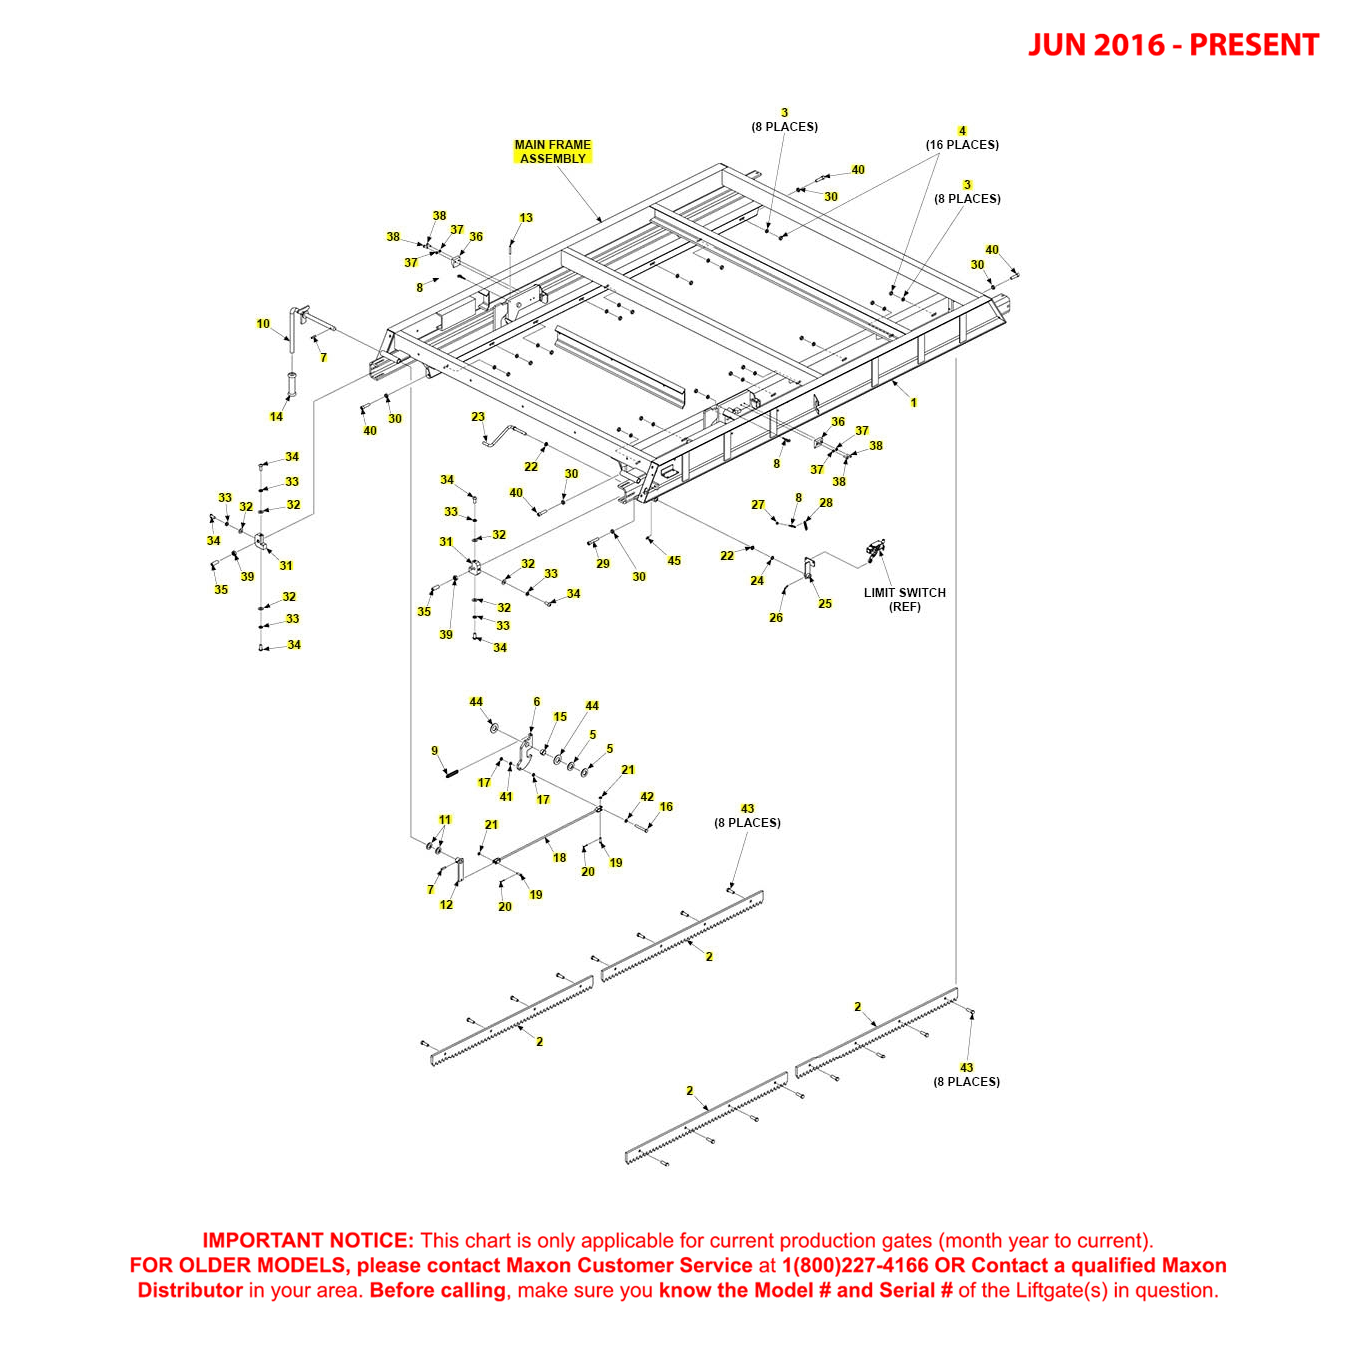 Maxon RA (June 2016 - Present) Main Frame Assembly Diagram